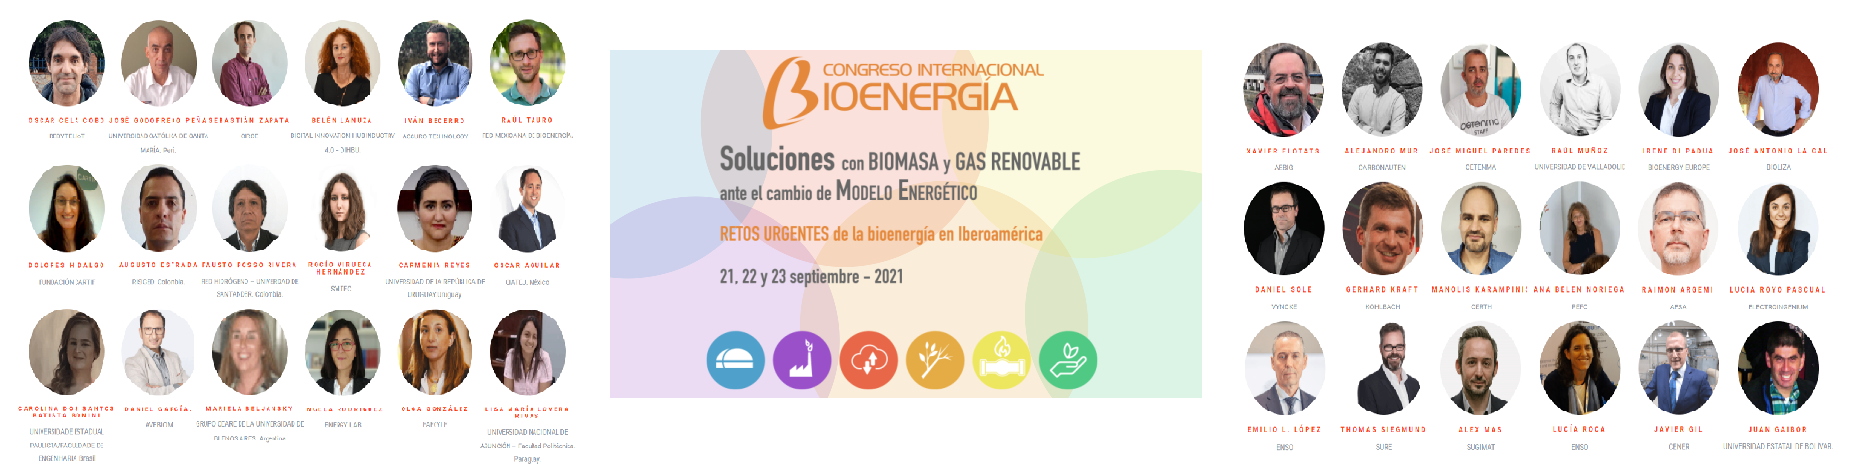 Congreso Internacional de Bioenergia